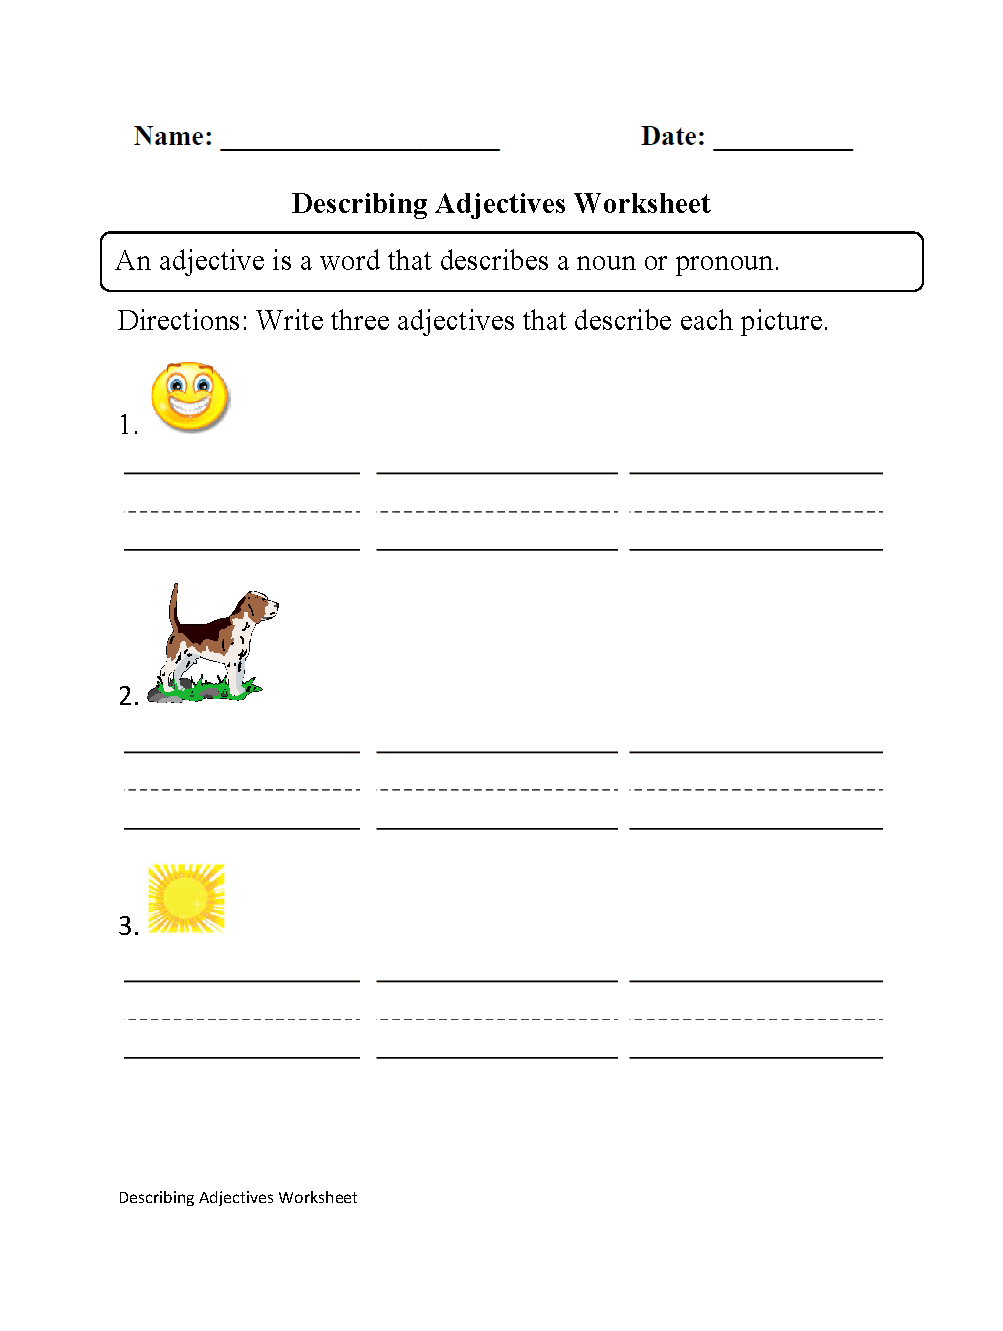 Describing Adjectives Worksheet